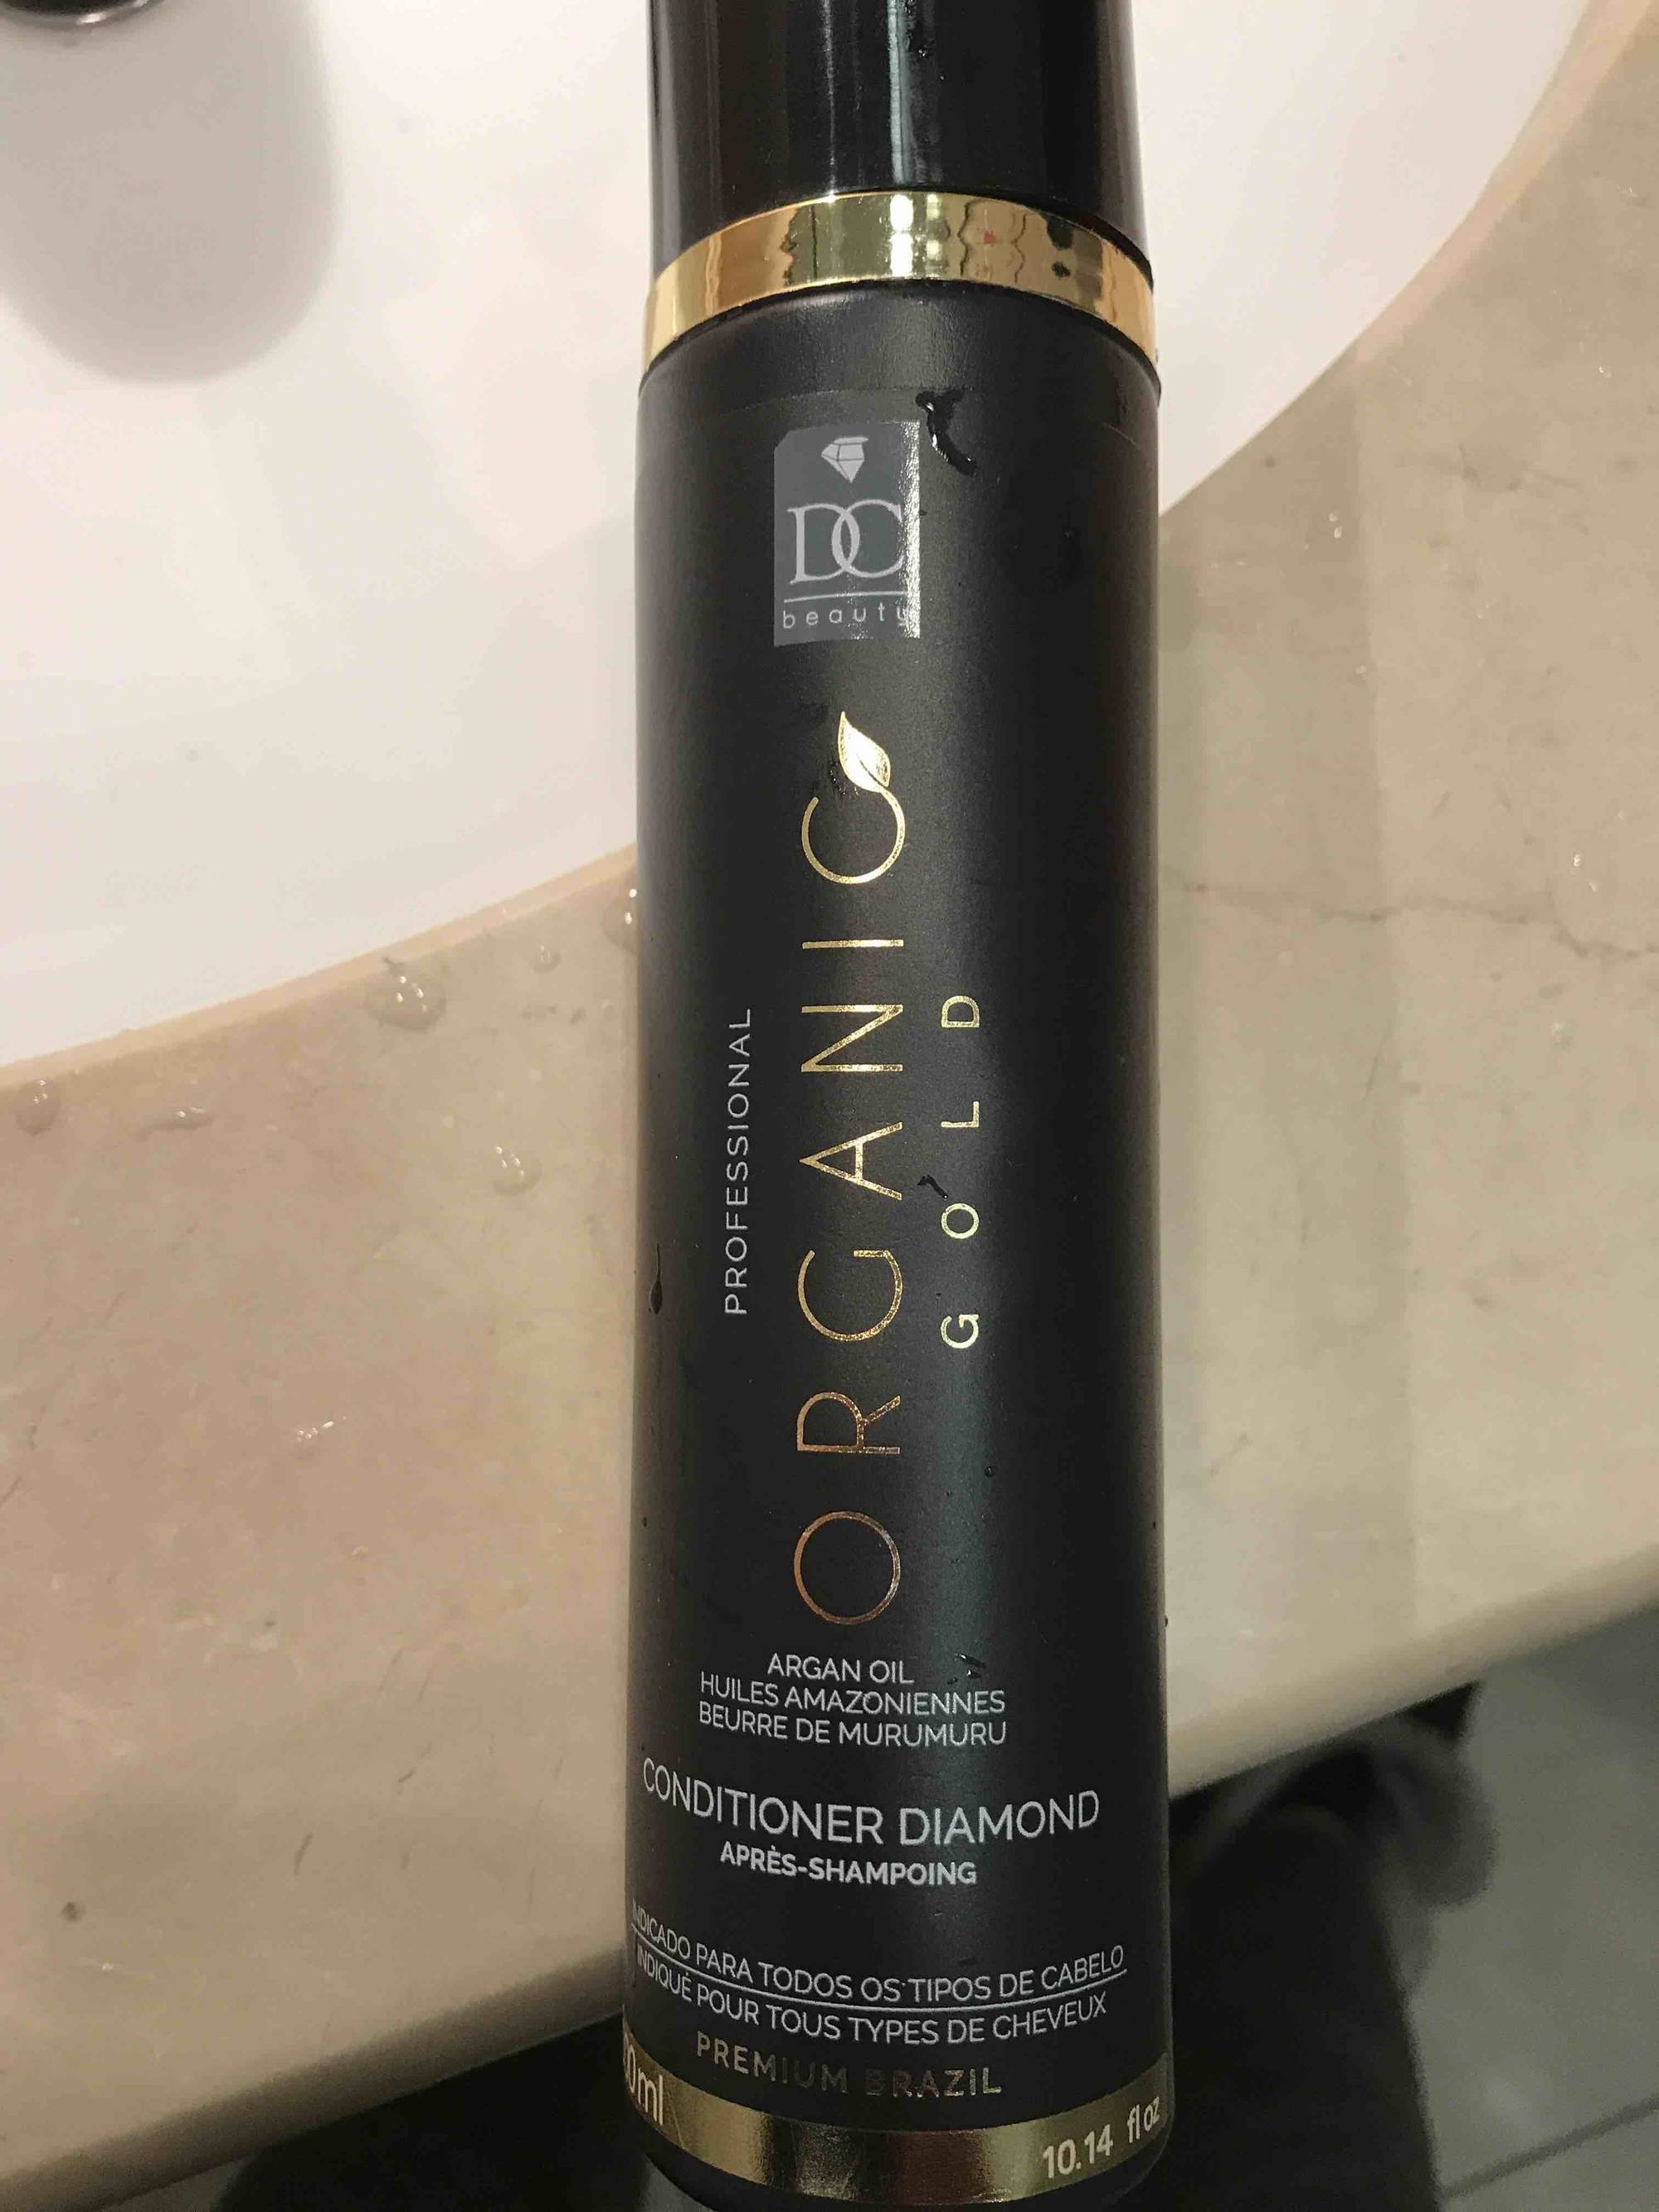 ORGANIC GOLD - Après-shampooing diamond